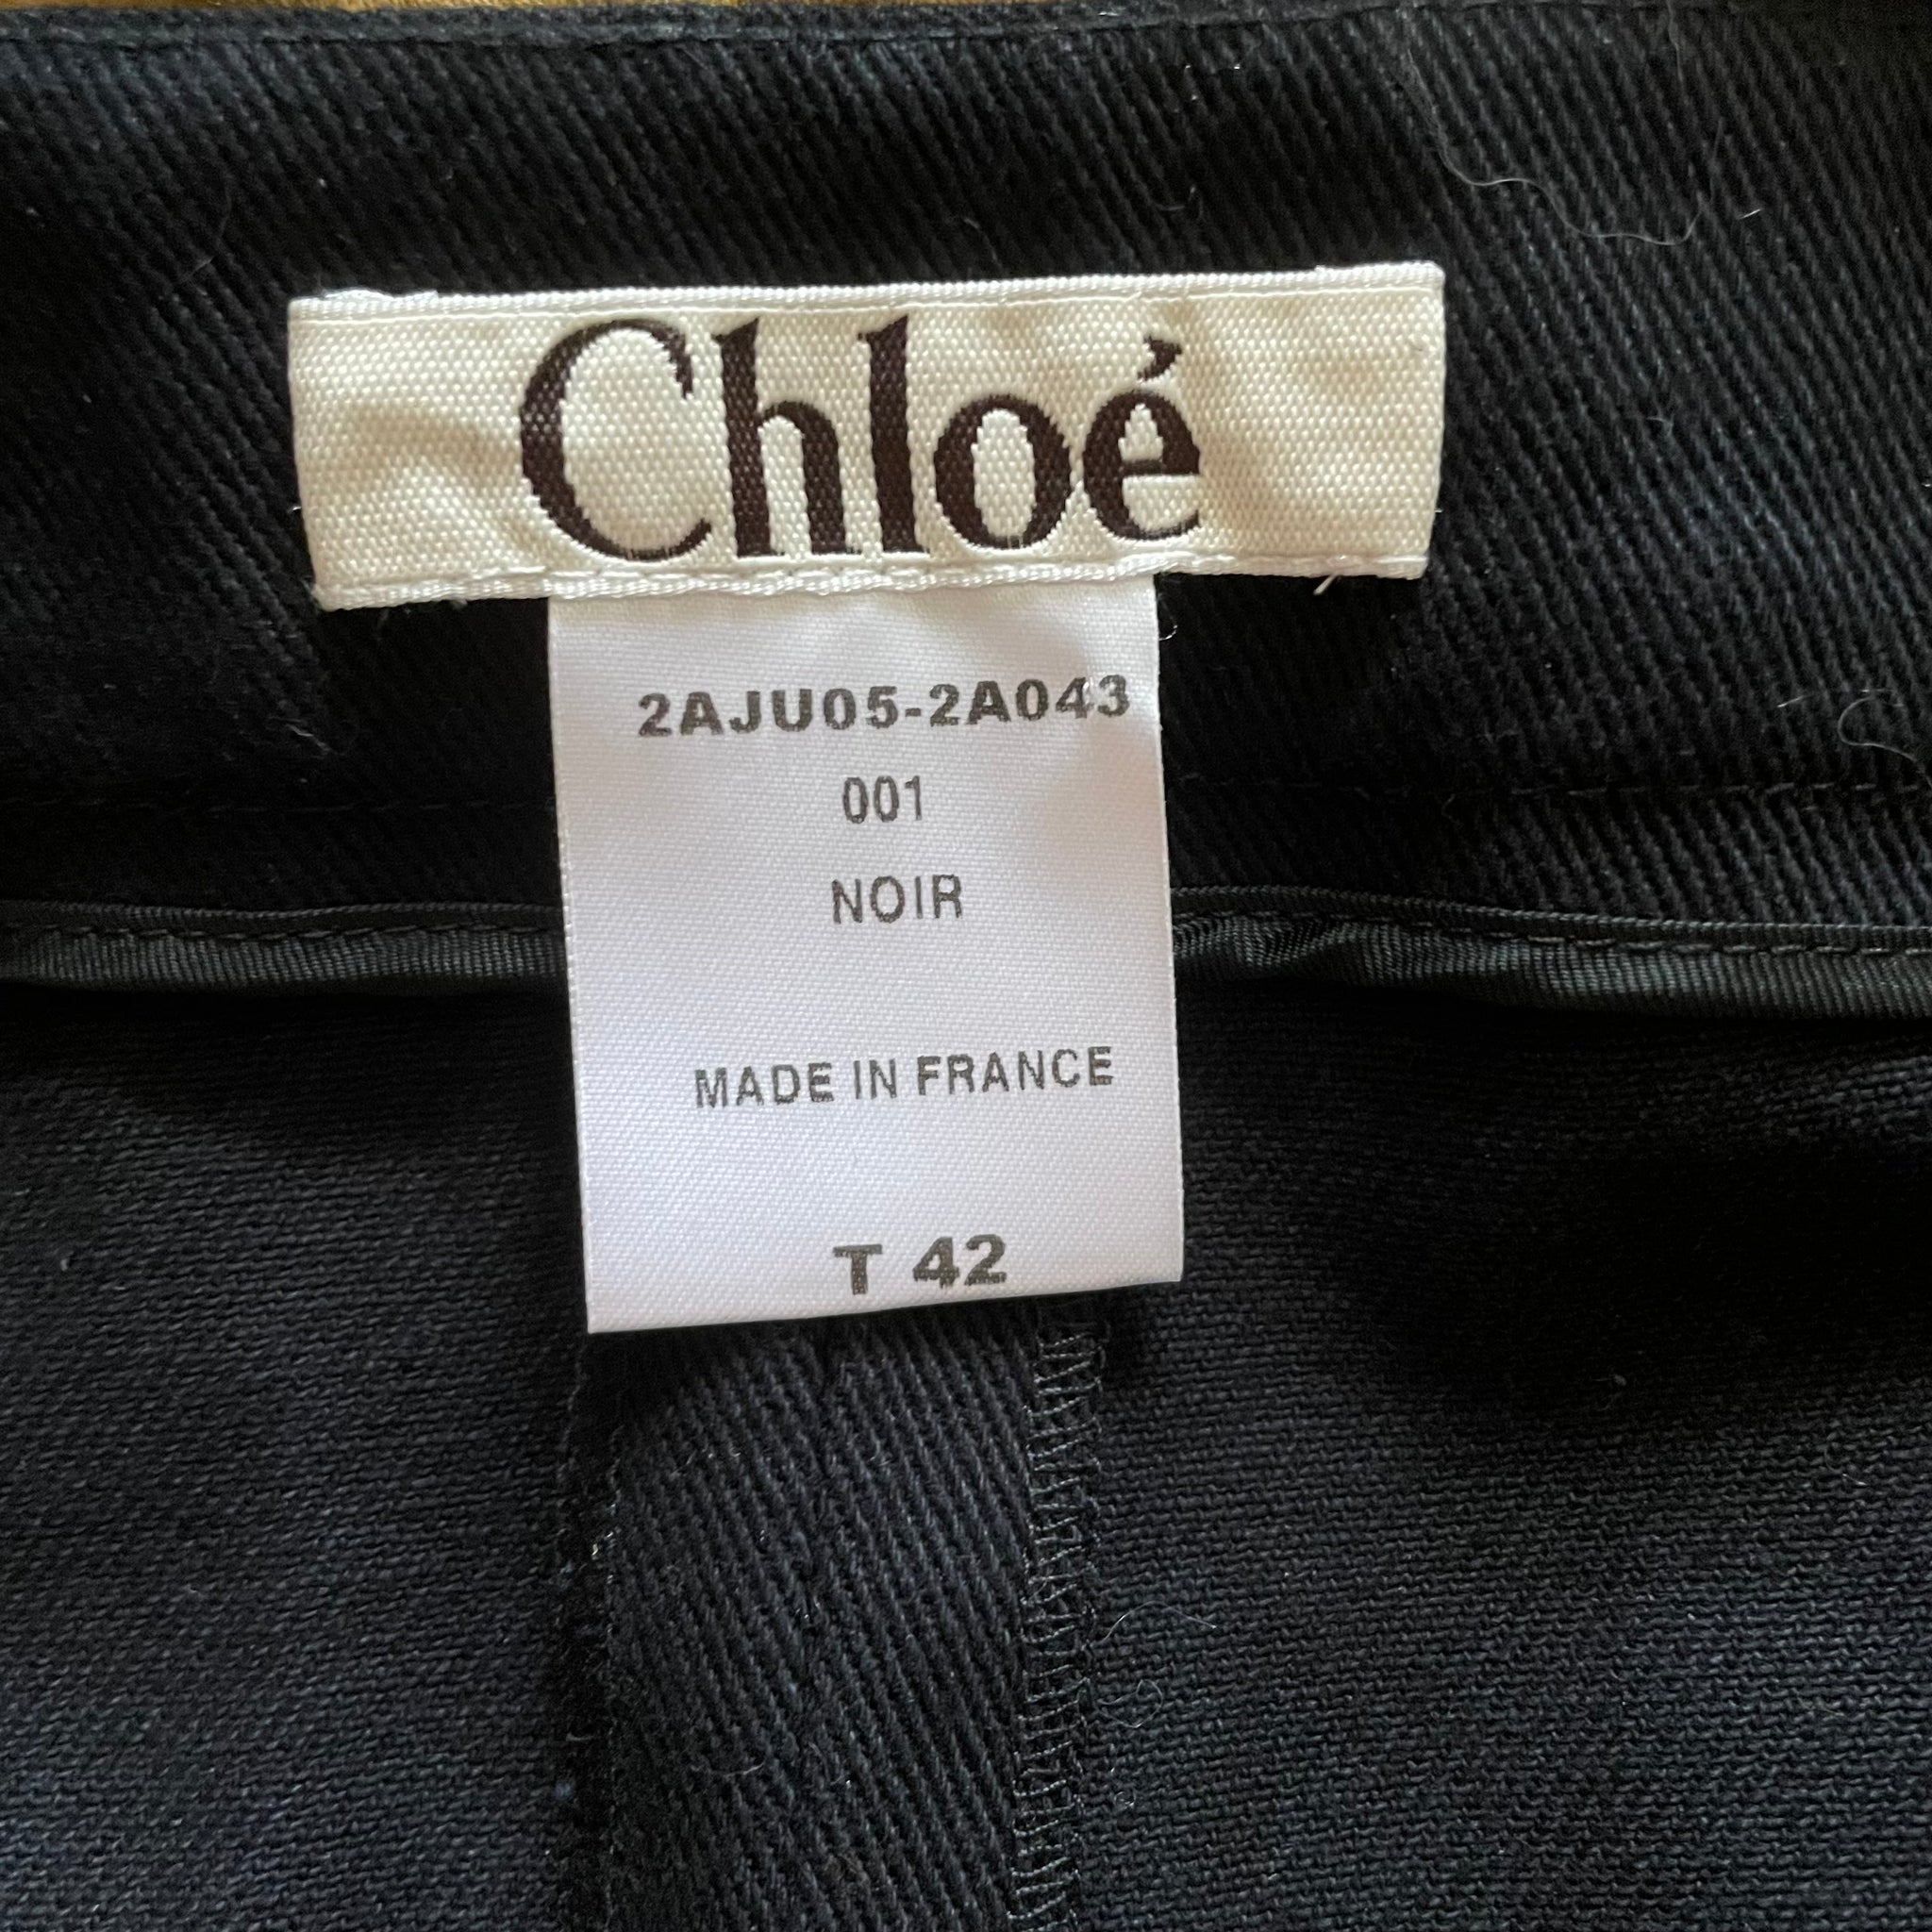 Chloè black denim pencil skirt, Size 12